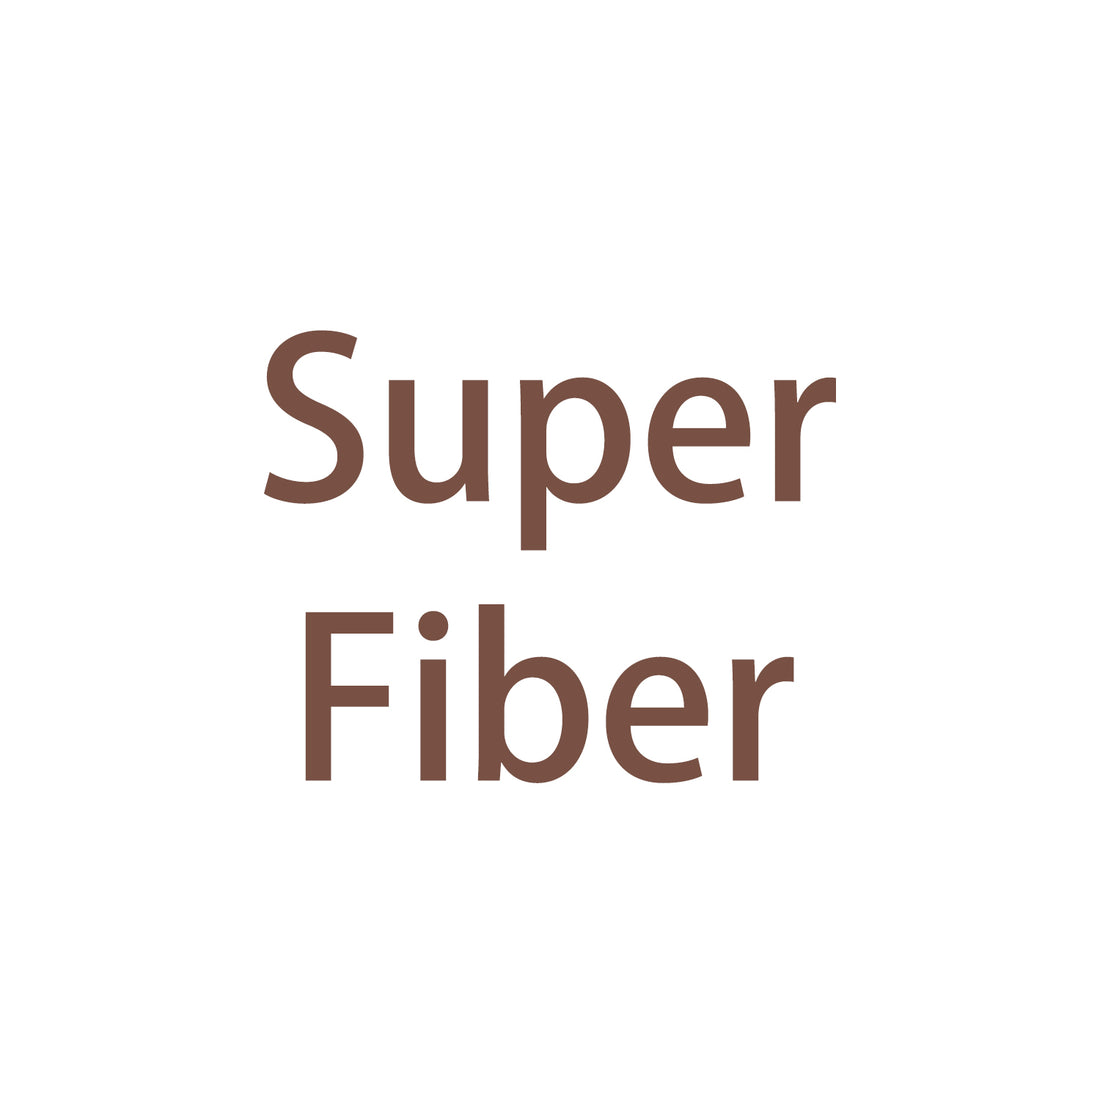 About 'SUPER FIBER'